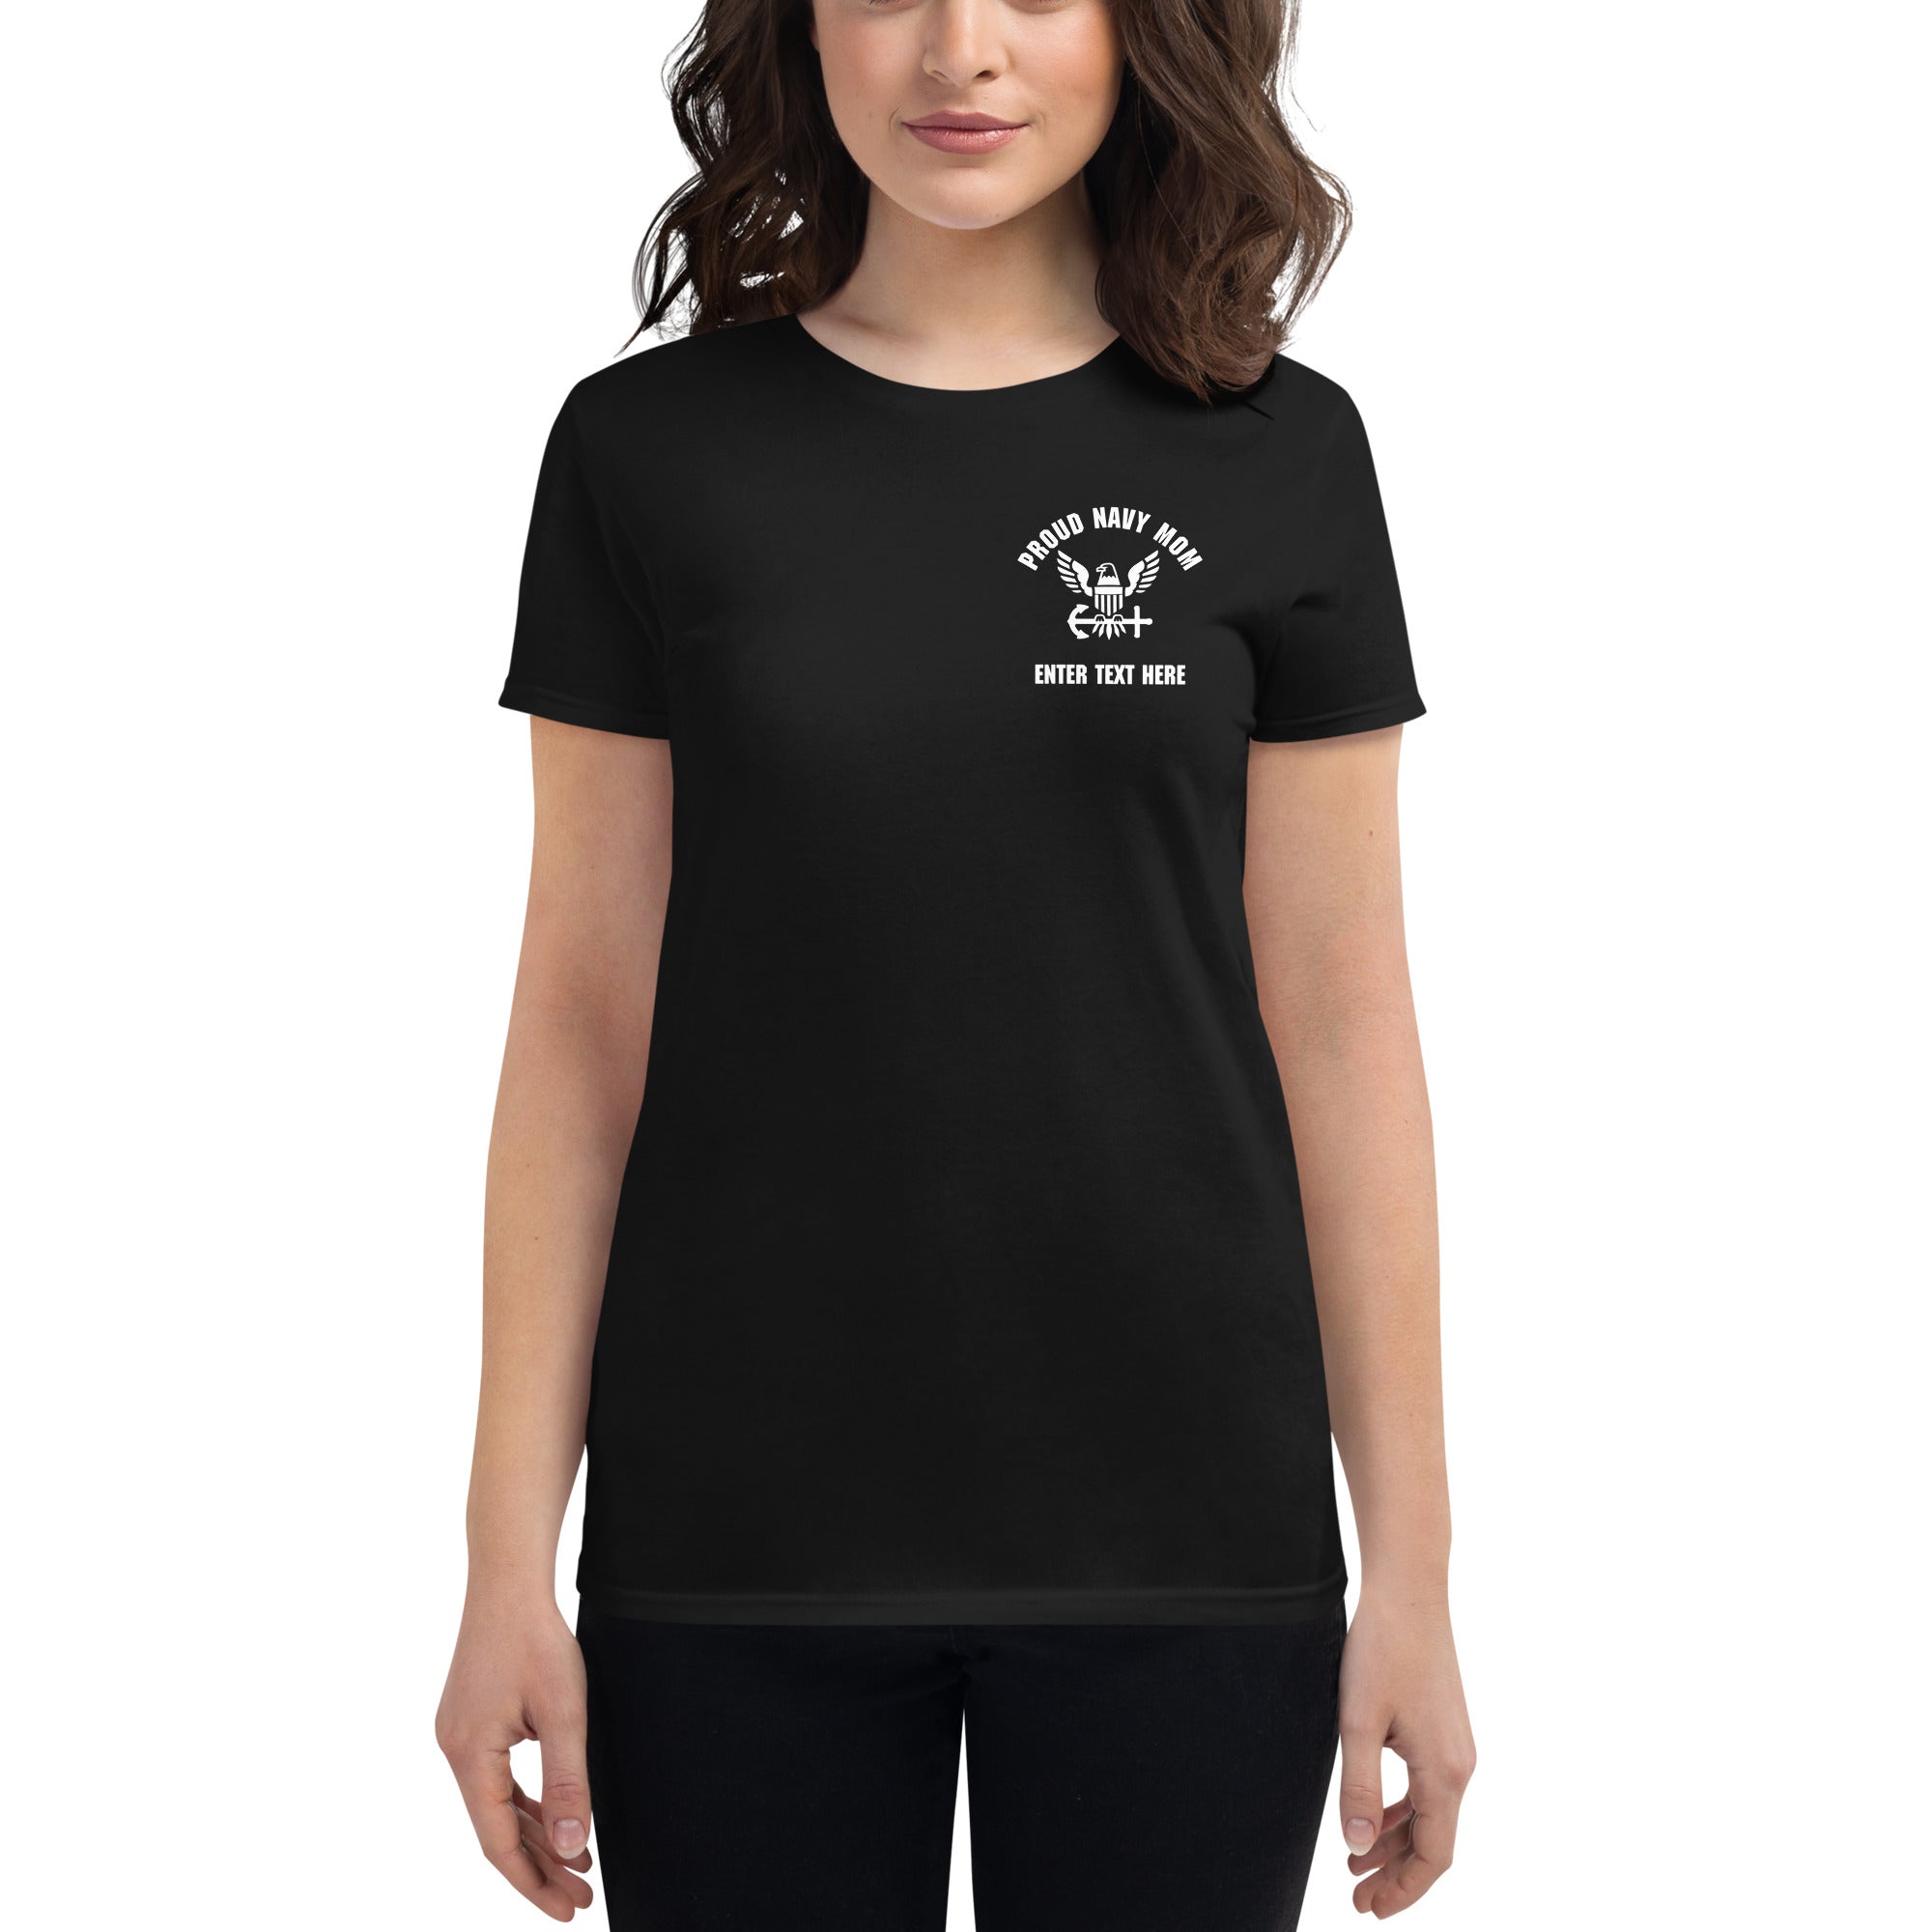 USS GEORGE WASHINGTON Proud Women's t-shirt